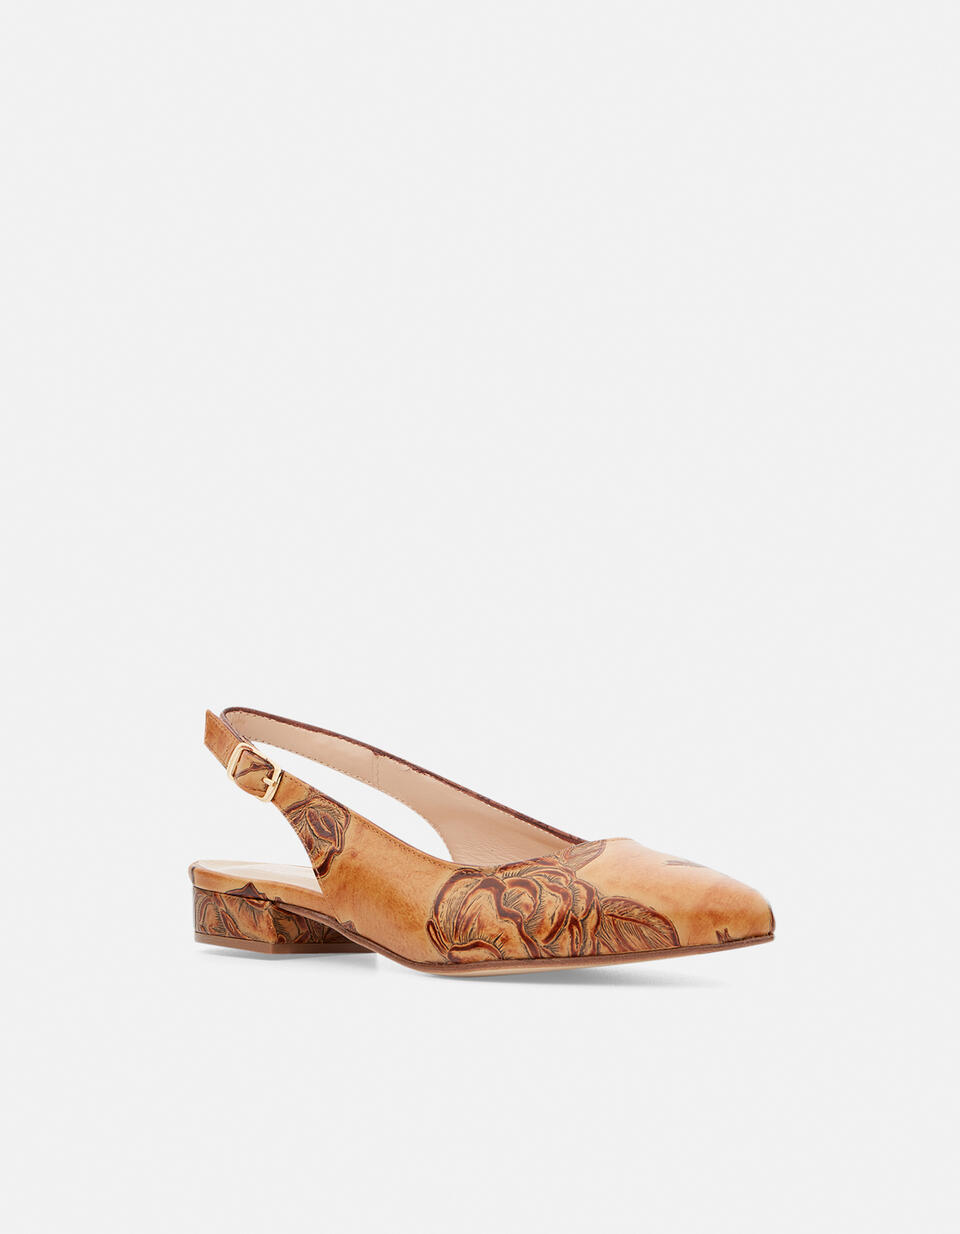 Slingback Mimi BEIGE  - Women Shoes - Shoes - Cuoieria Fiorentina